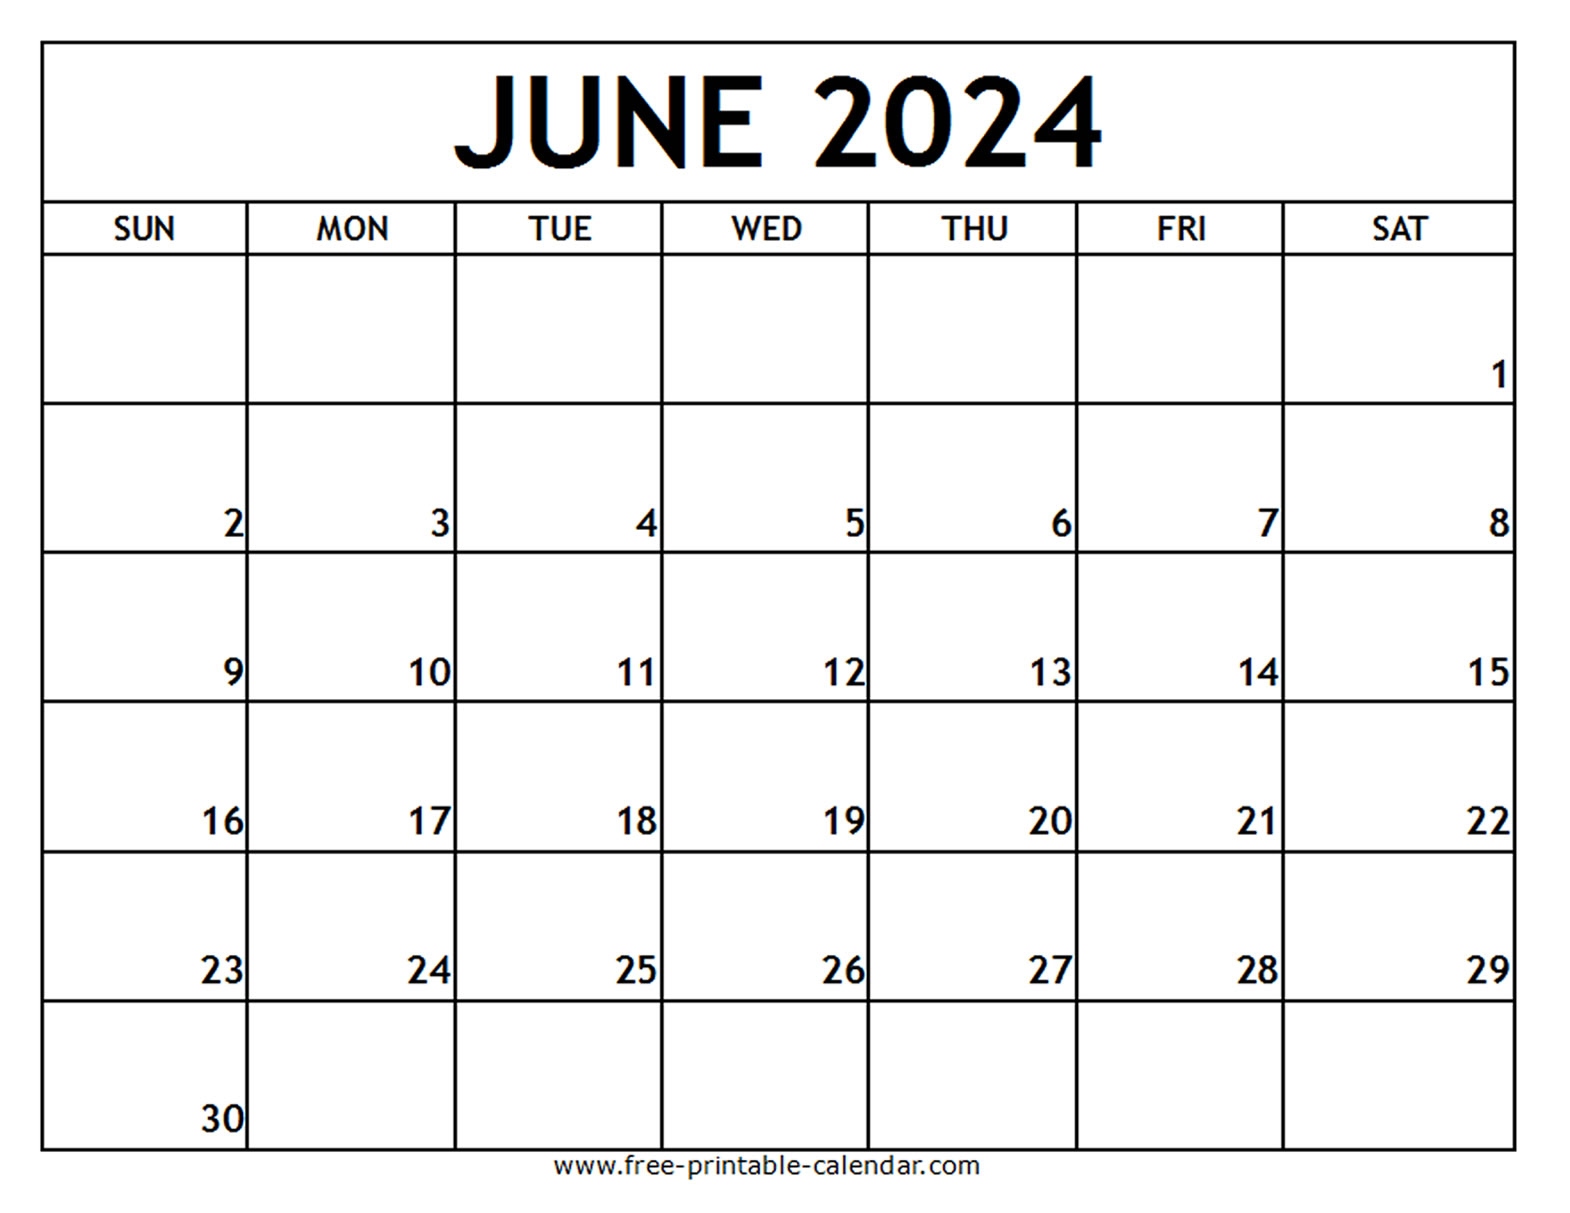 June 2024 Printable Calendar - Free-Printable-Calendar pertaining to Free Printable Calend June 2024